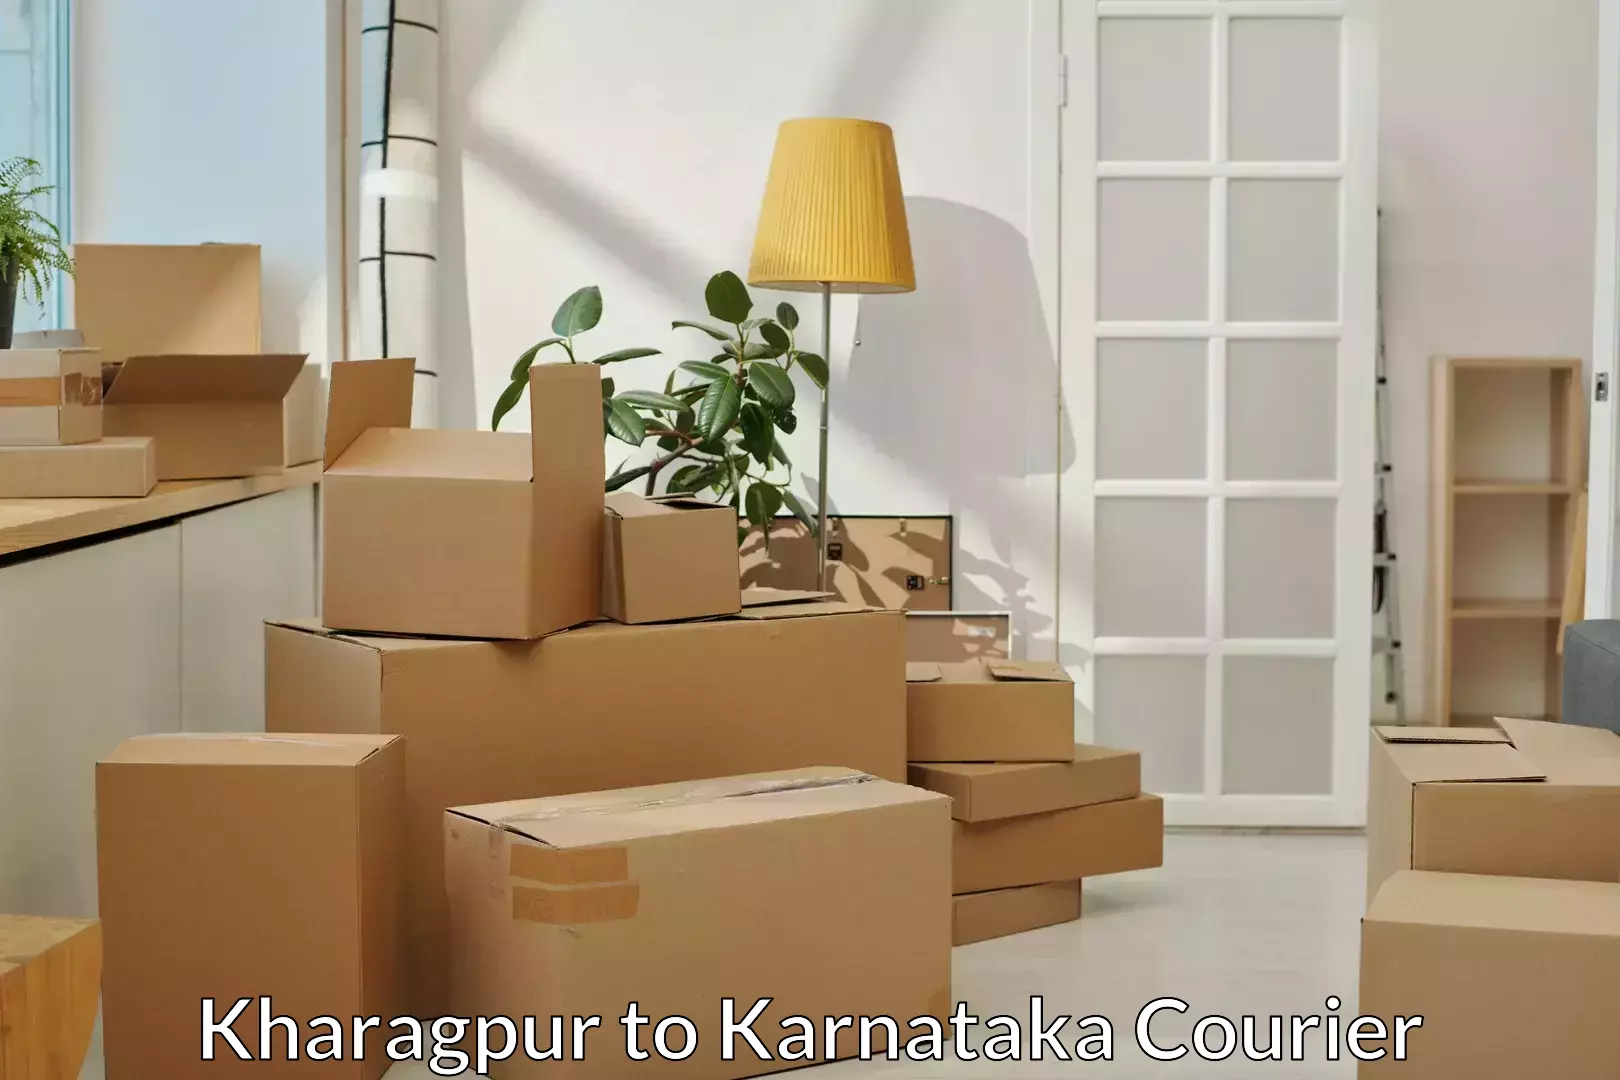 Professional movers and packers Kharagpur to Karnataka